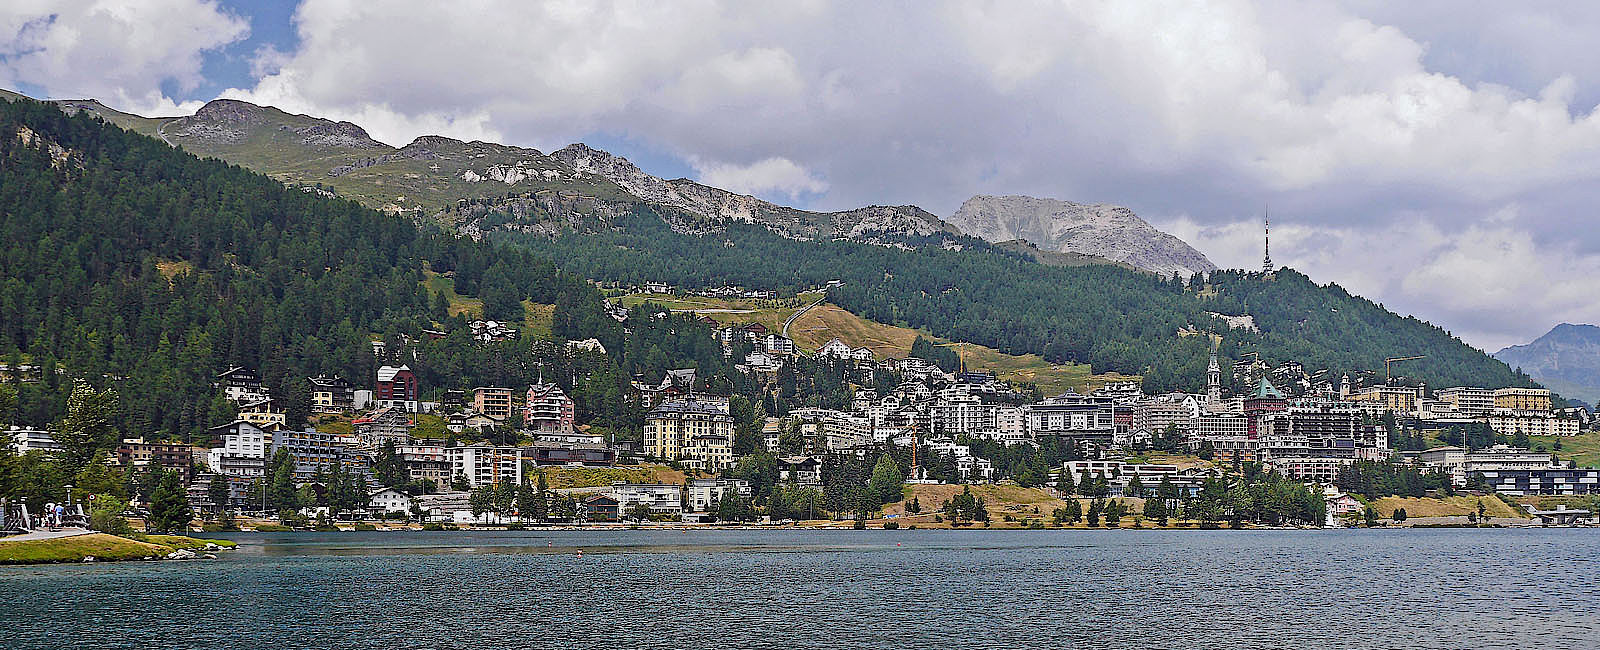 ST. MORITZ
 Urlaub St. Moritz – Top oft he World 